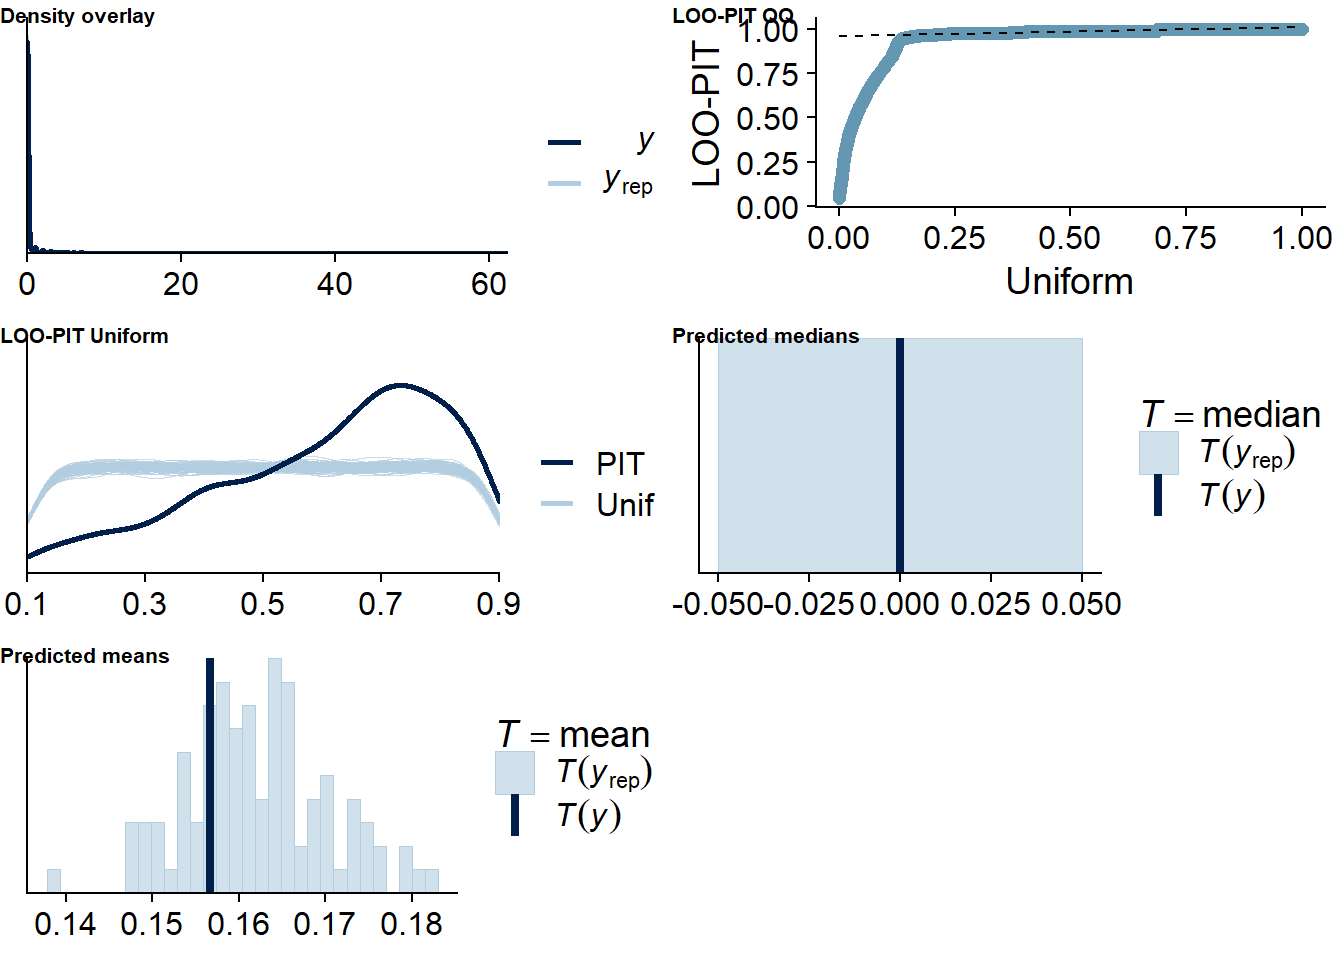 Posterior predictive checks for Life Satisfaction-Audiobooks model